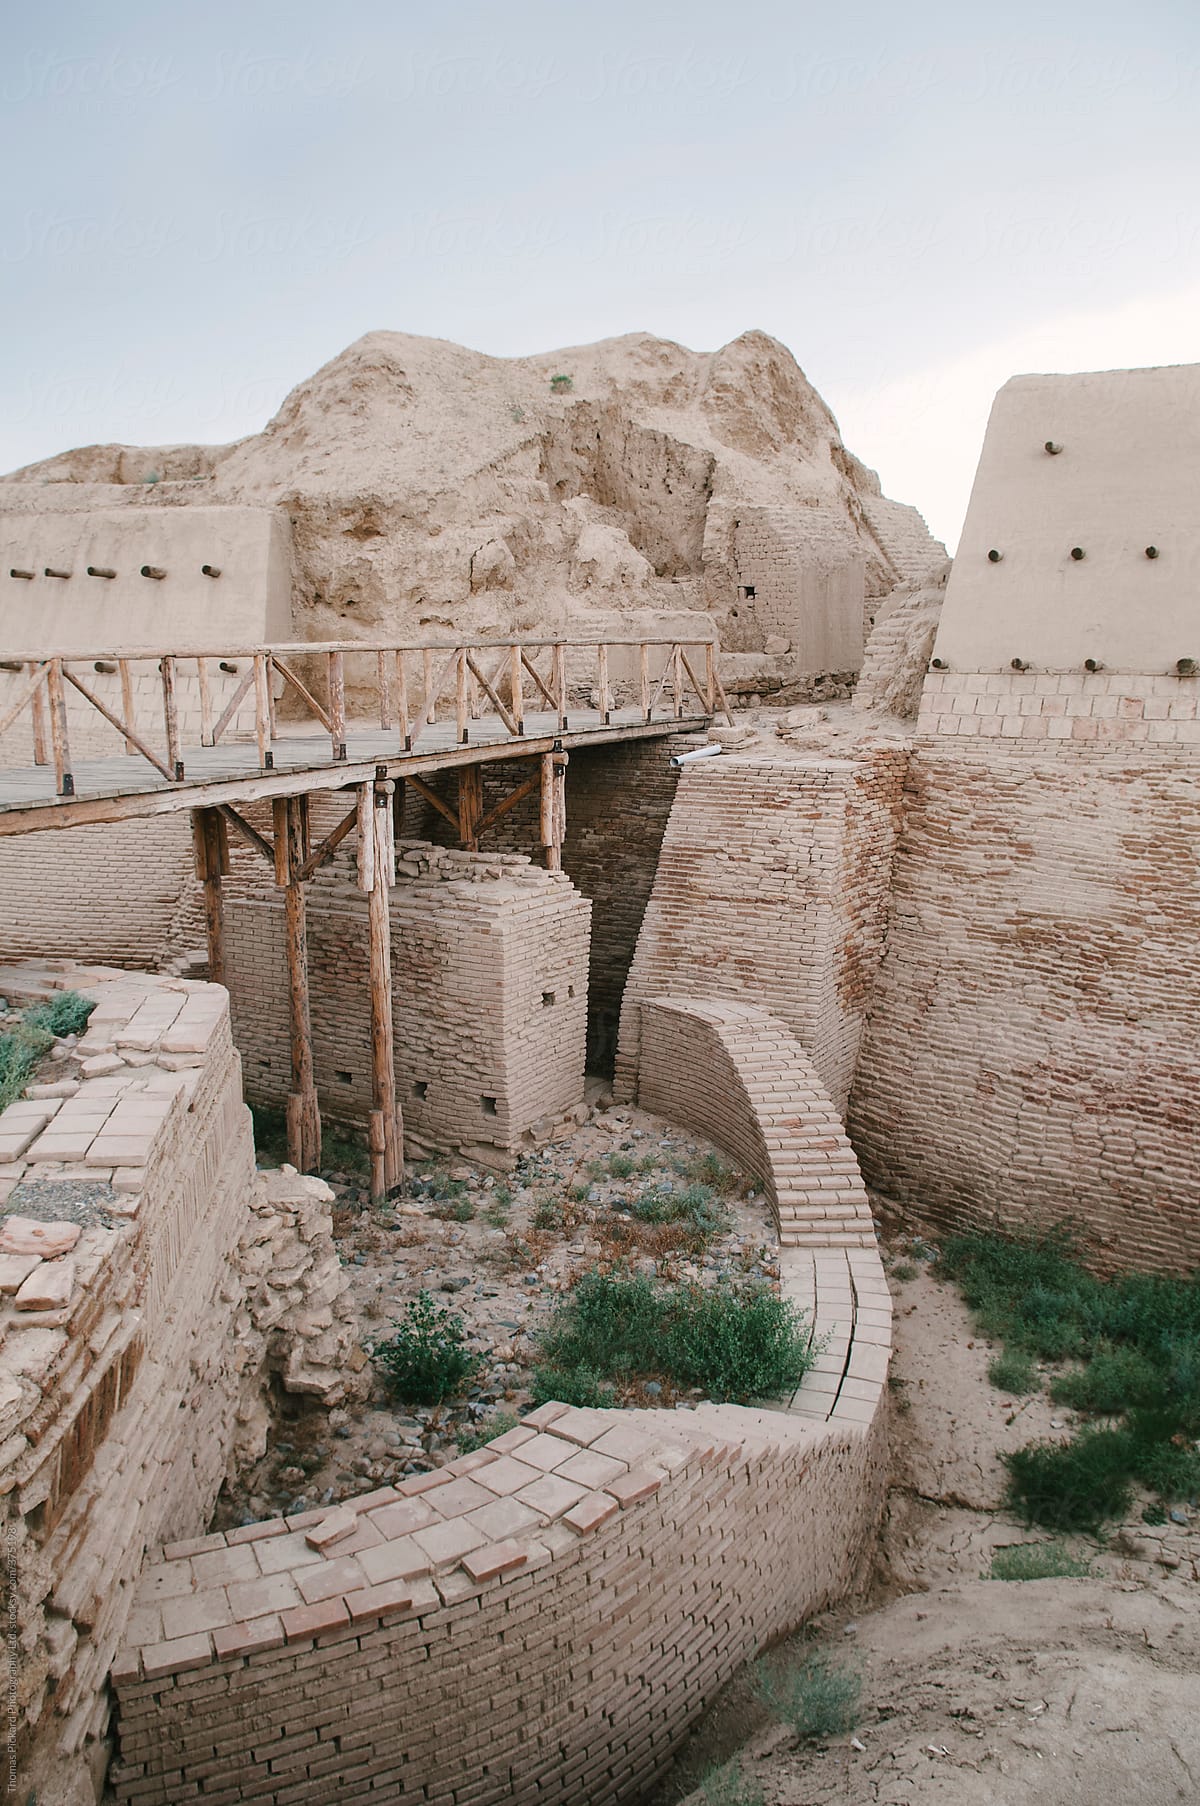 Remains of the Silk Road city Sauran, Kazakhstan.